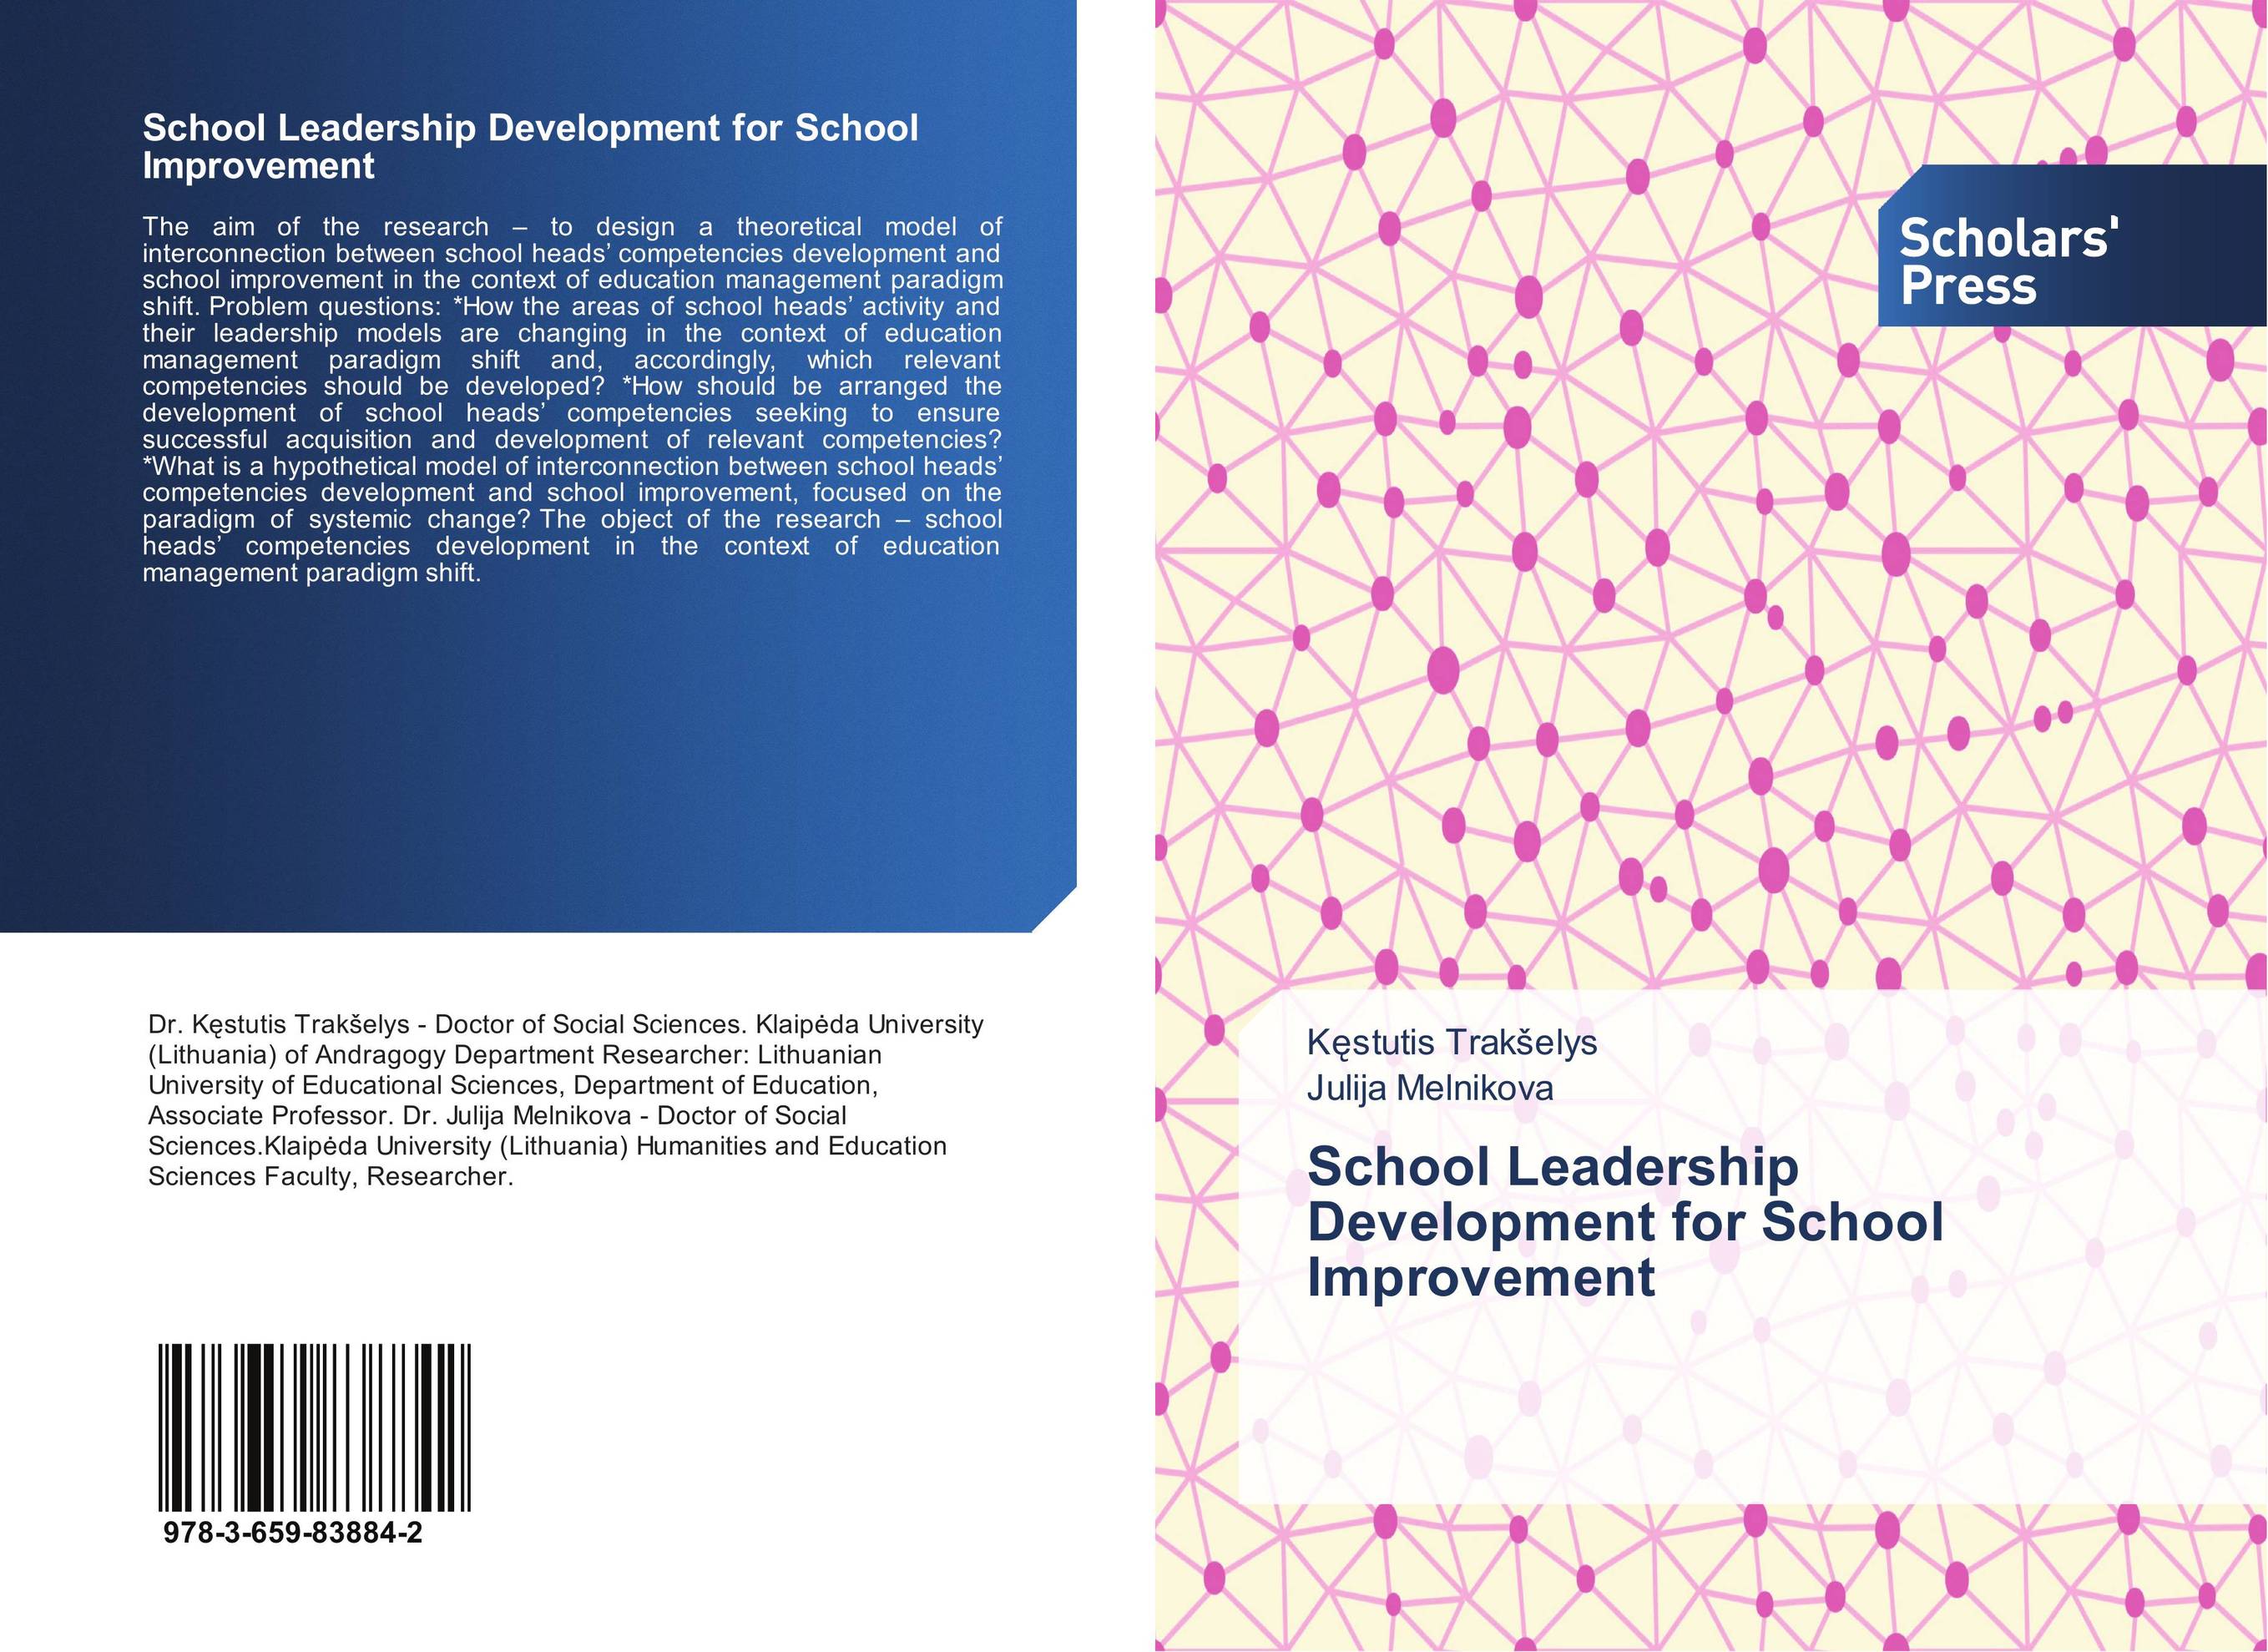 School Leadership Development for School Improvement